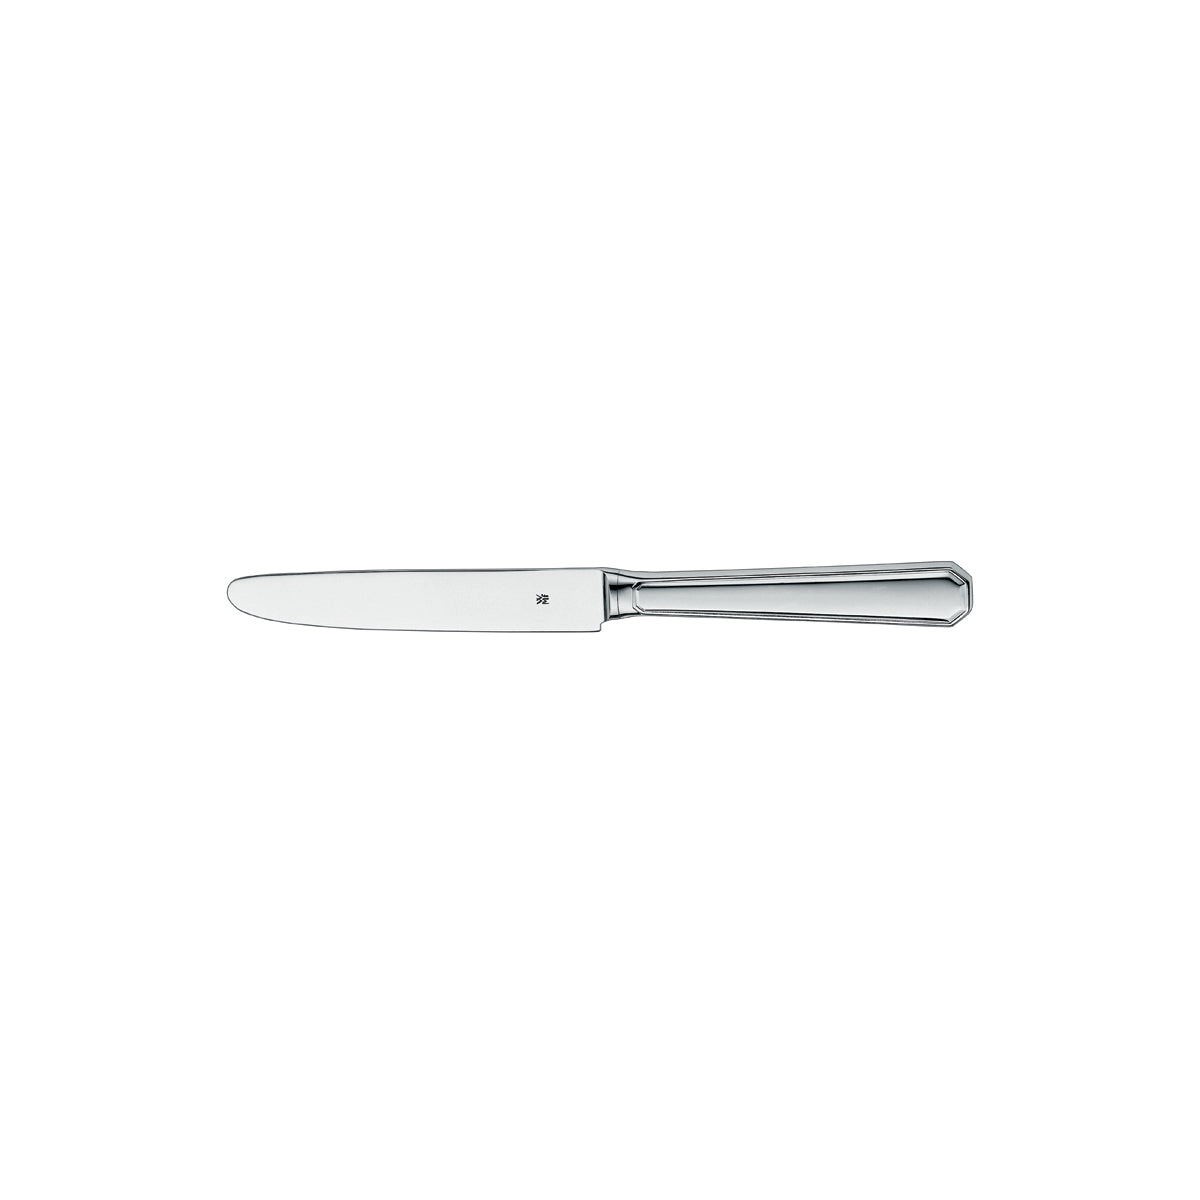 10.6203.6069 WMF Mondial Table Knife Silverplated Tomkin Australia Hospitality Supplies